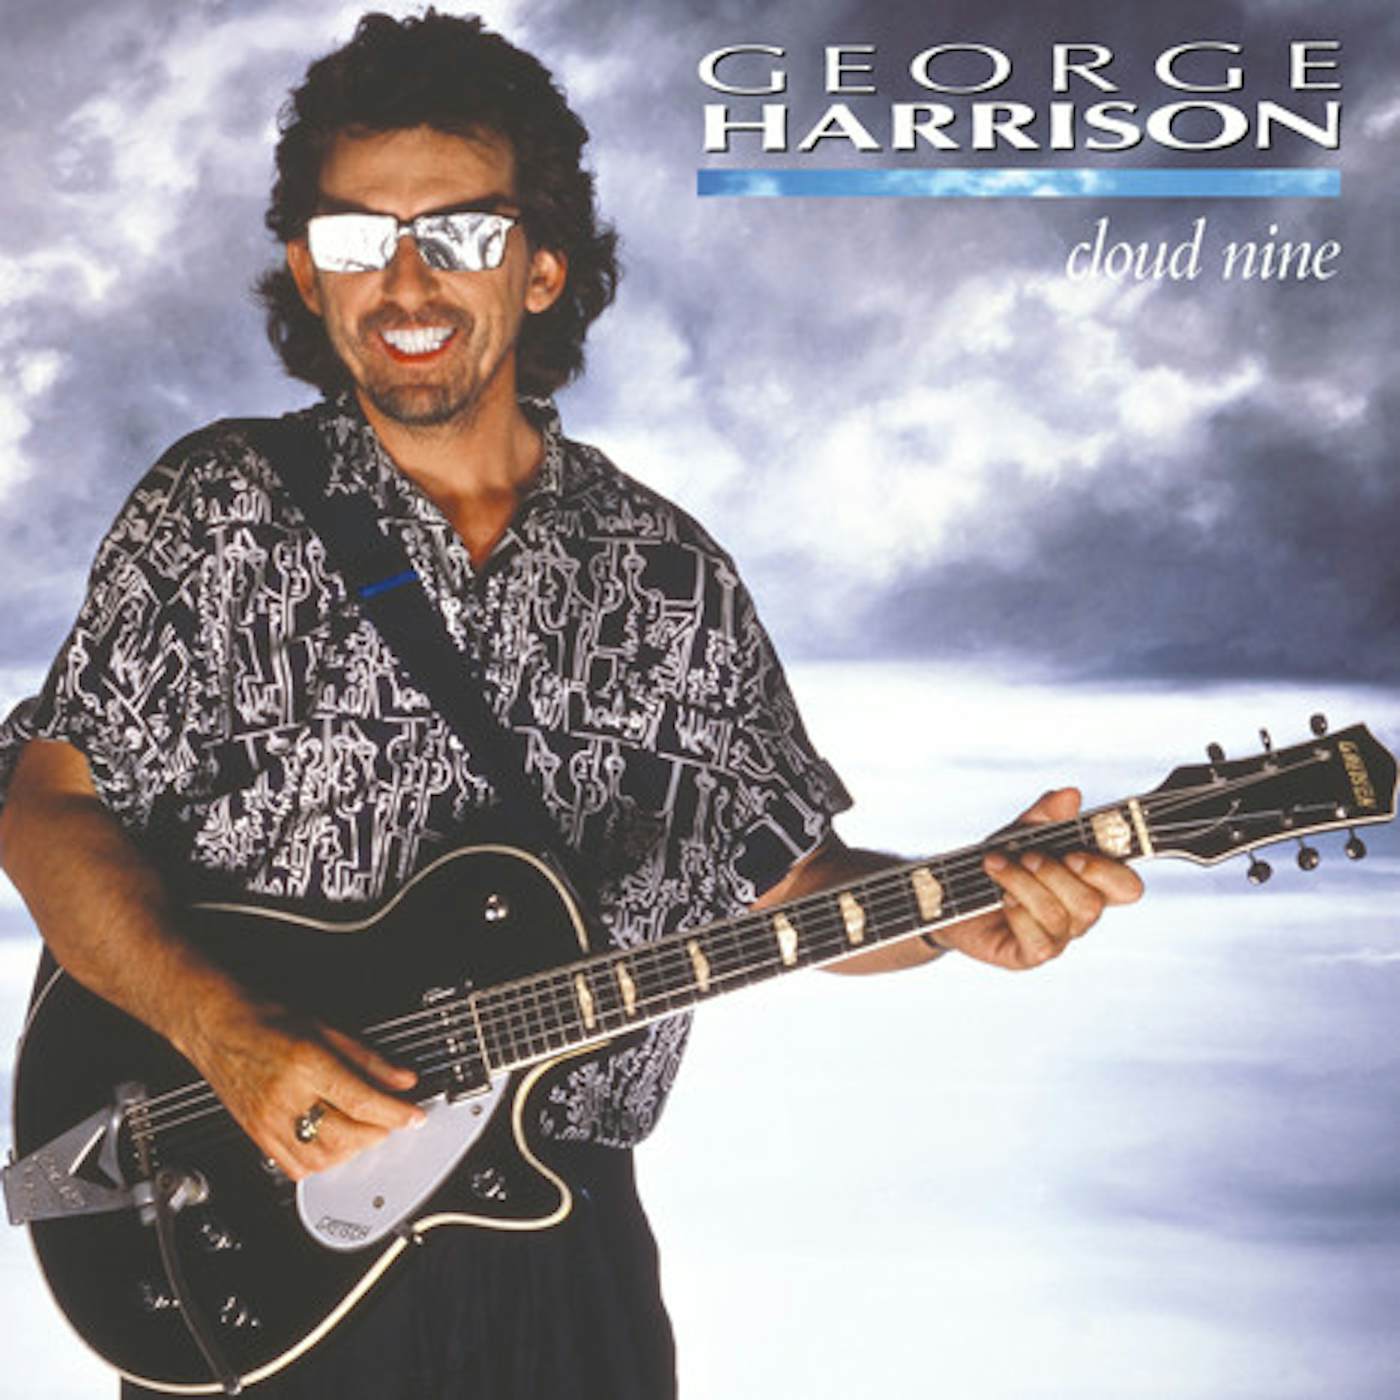 George Harrison CLOUD 9 Vinyl Record